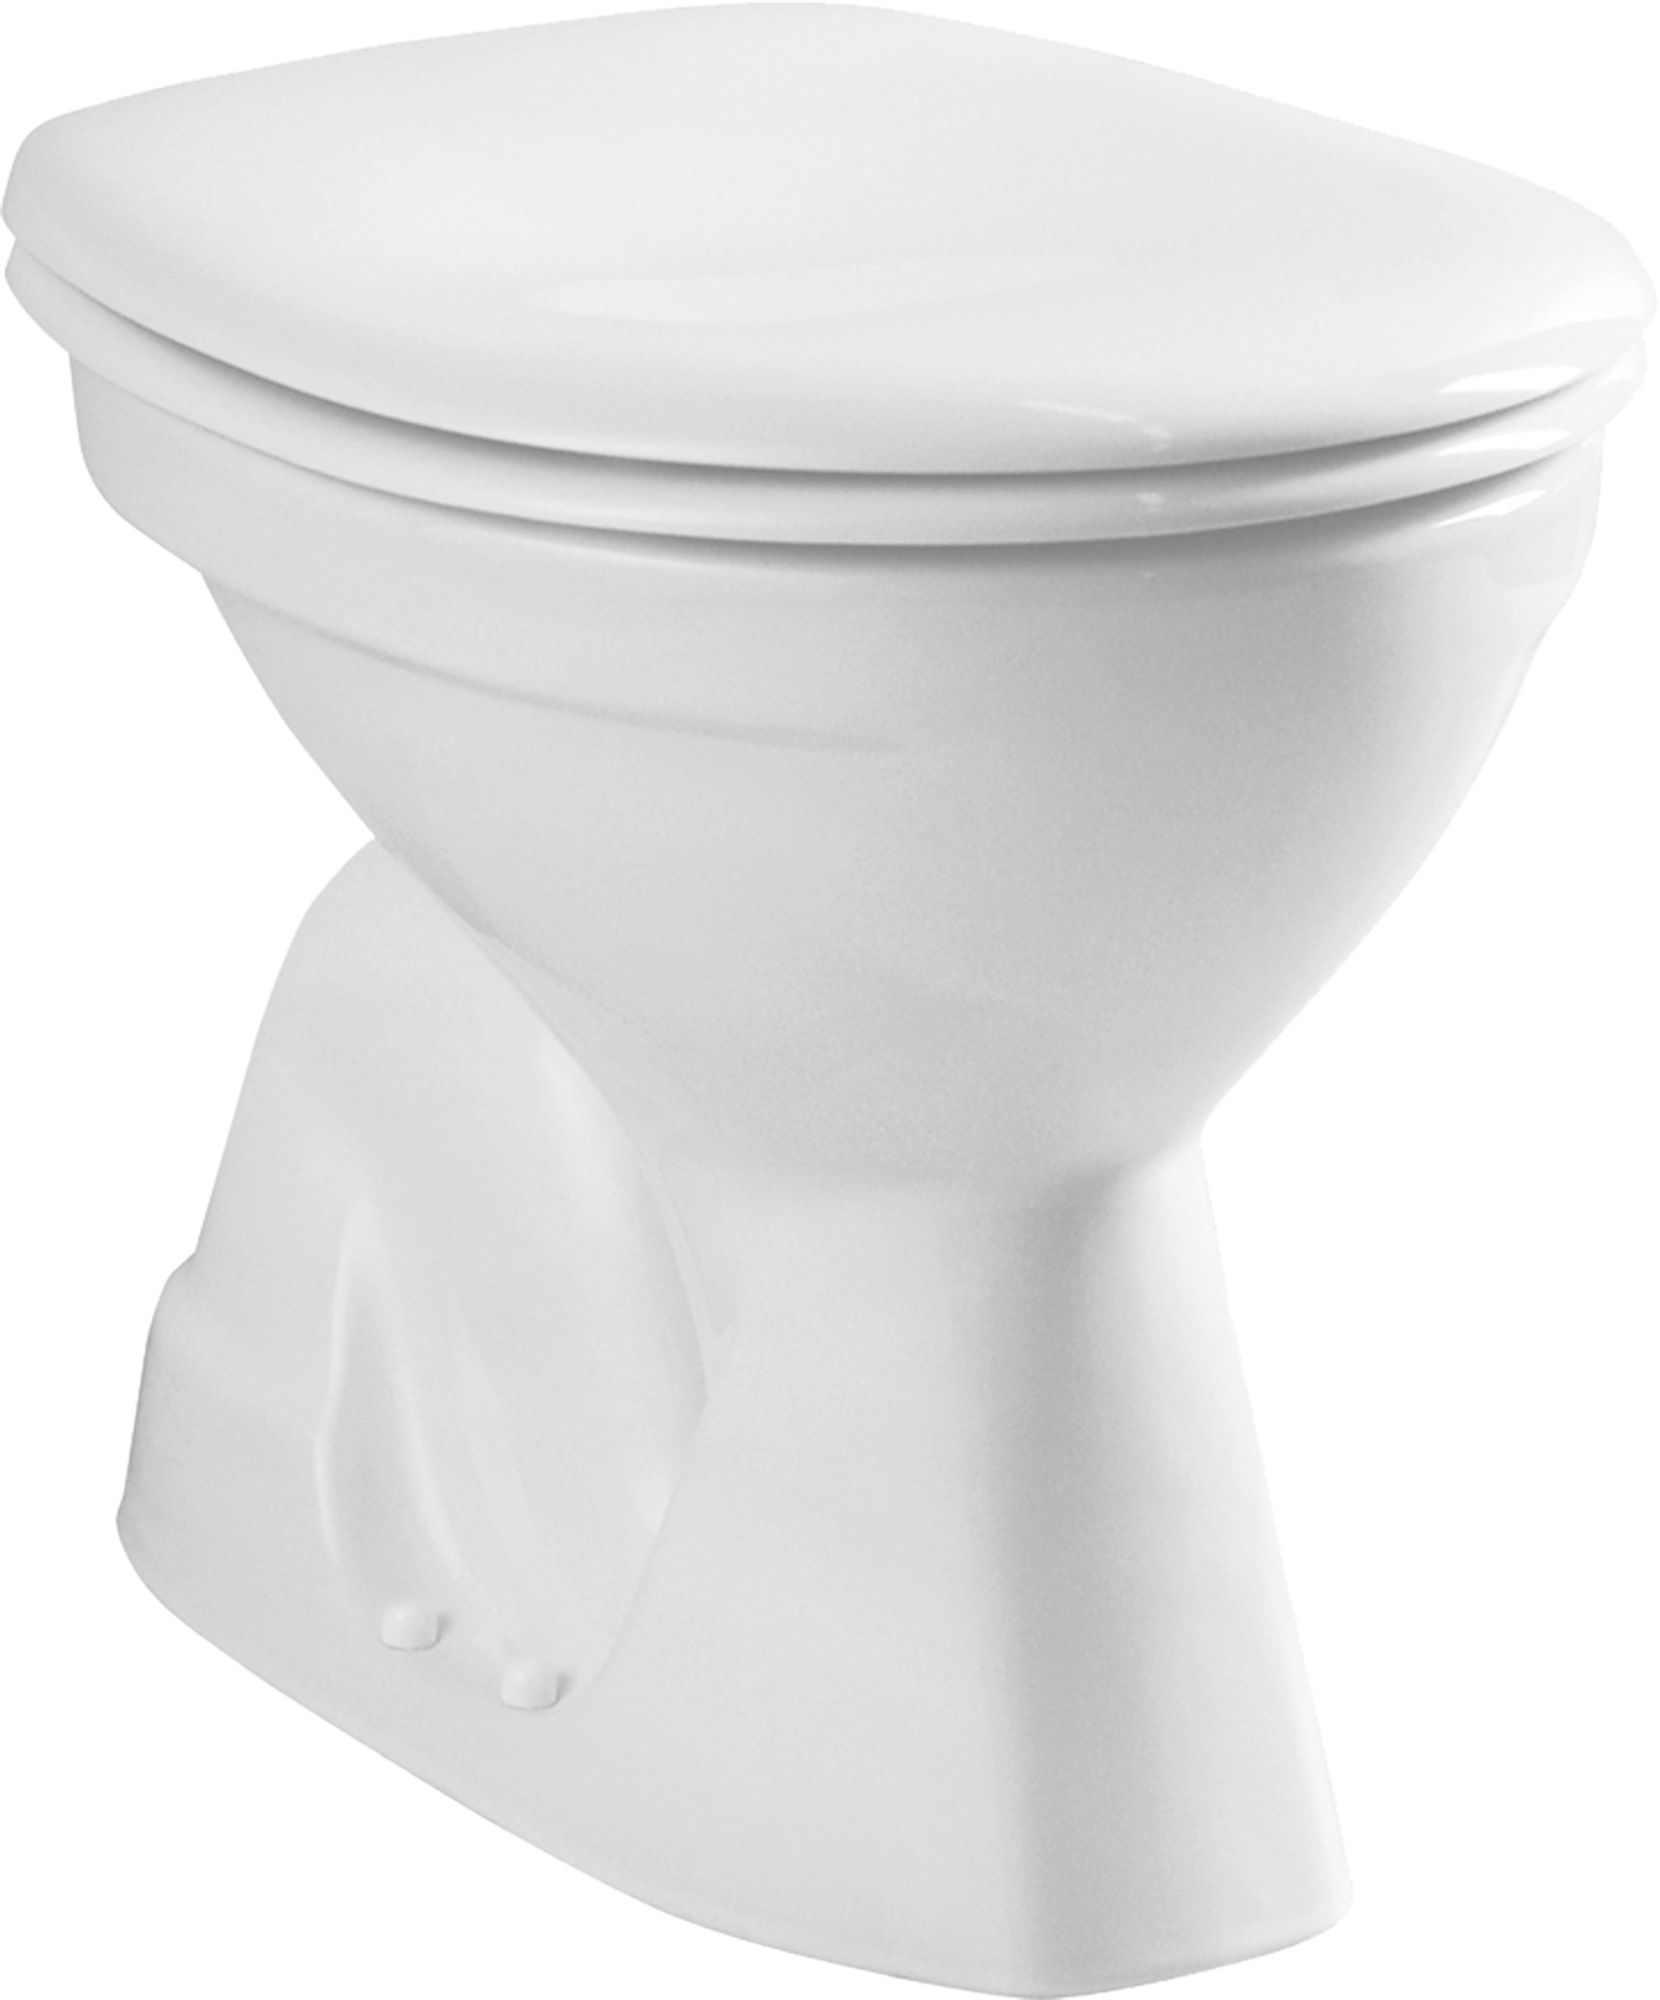 SYDNEY floor mounted toilet bowl, standard, S-trap